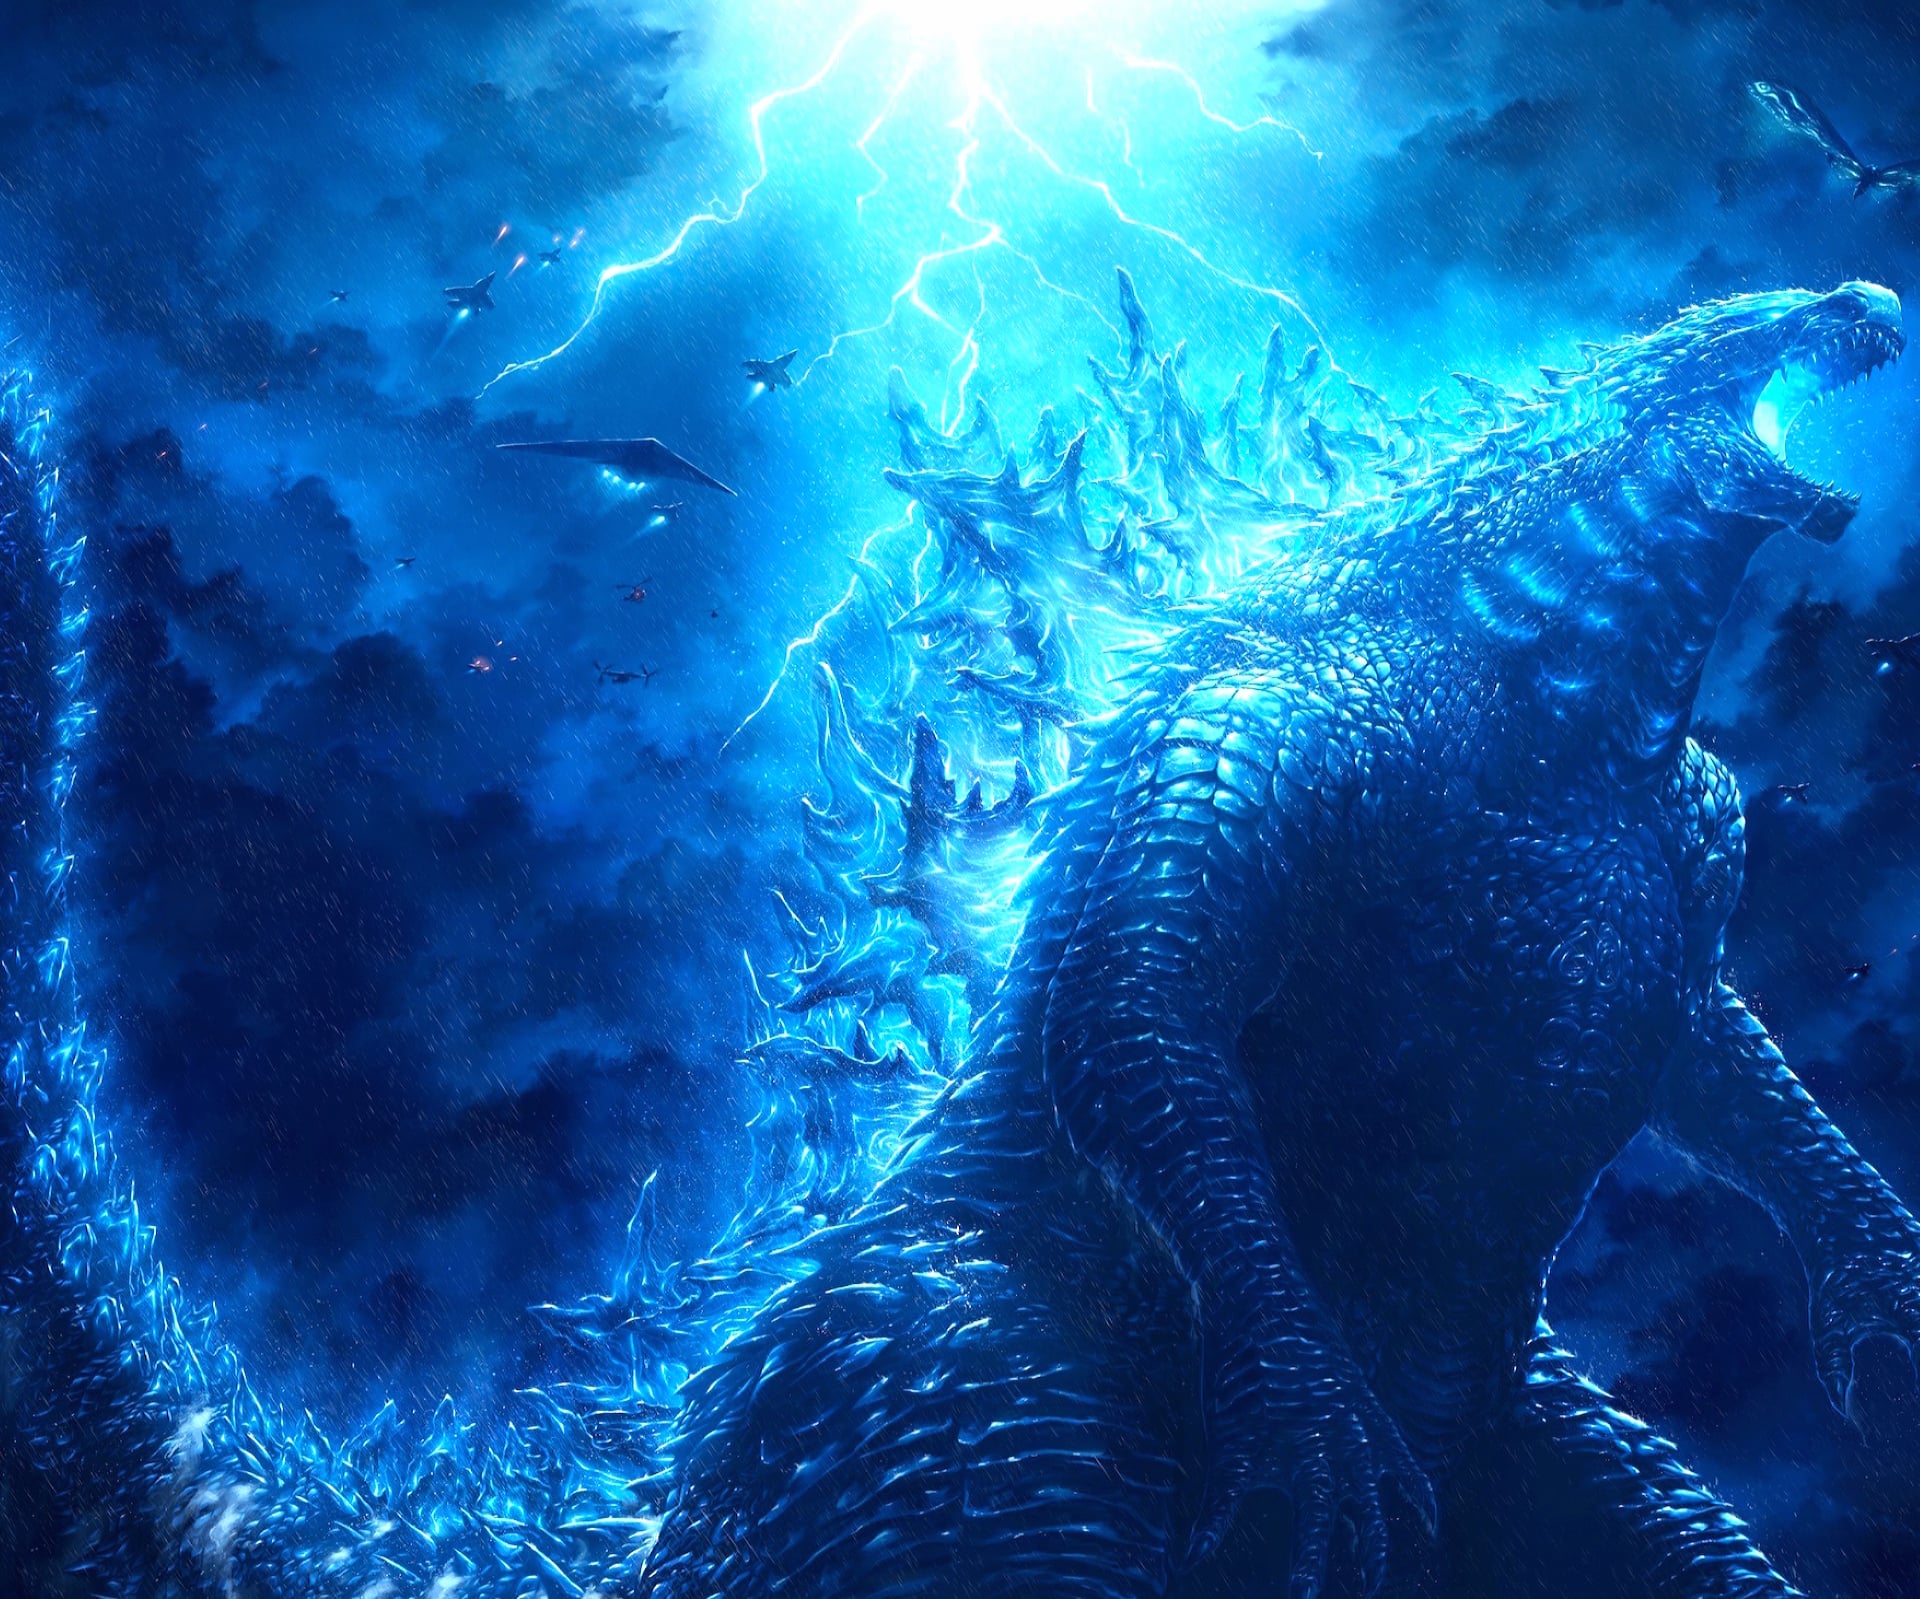 Fantasy Godzilla at 1024 x 768 size wallpapers HD quality